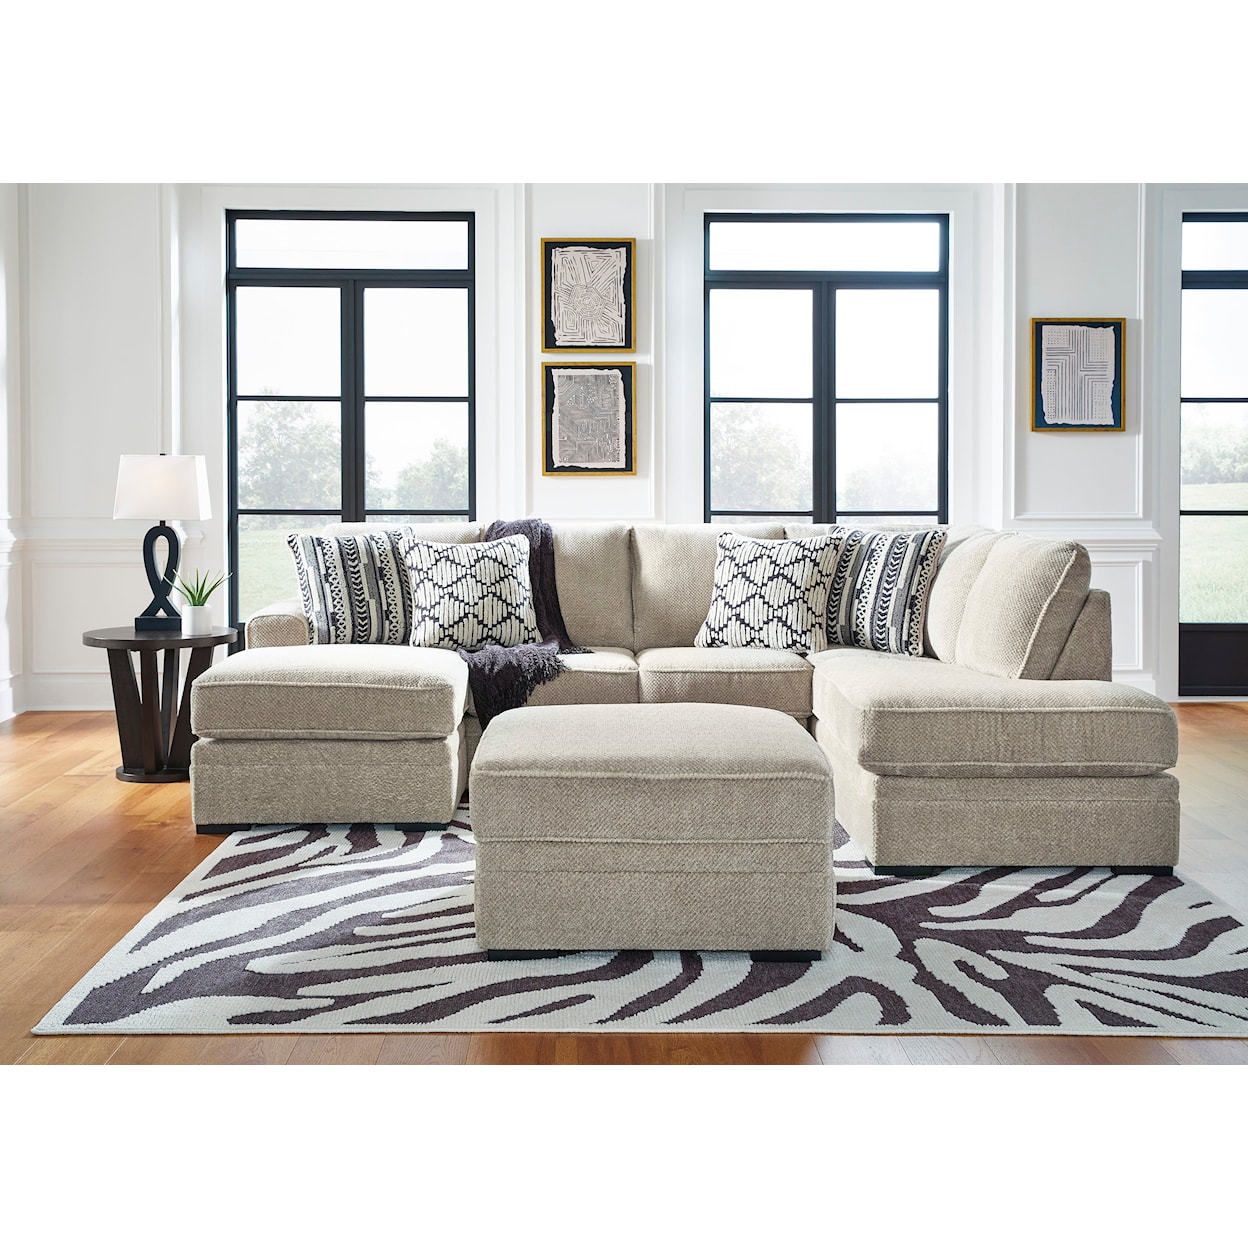 Benchcraft Calnita Living Room Set